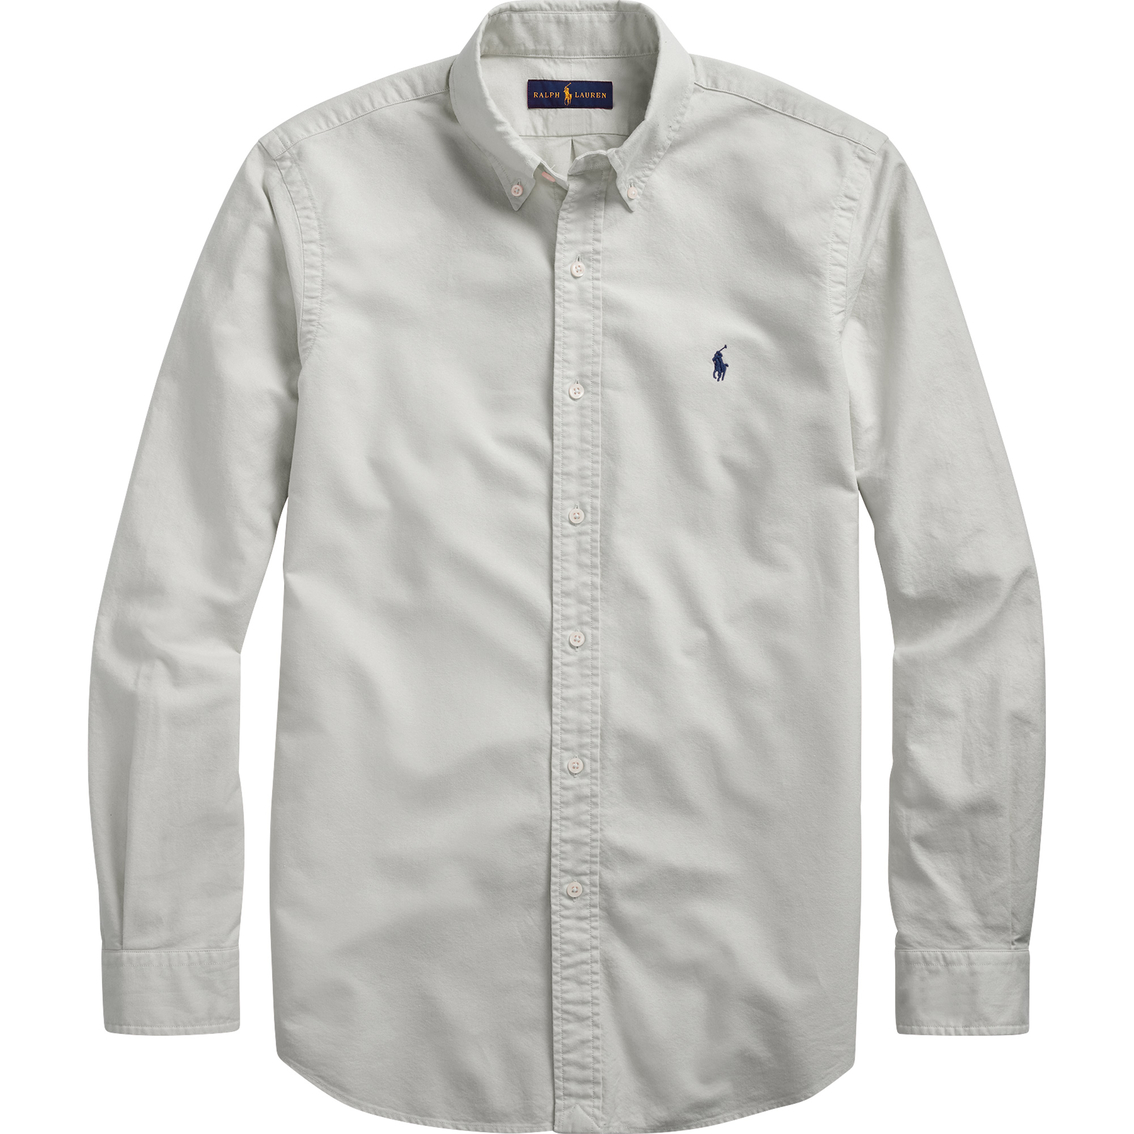 Polo Ralph Lauren Classic Fit Oxford Shirt | Shirts | Clothing